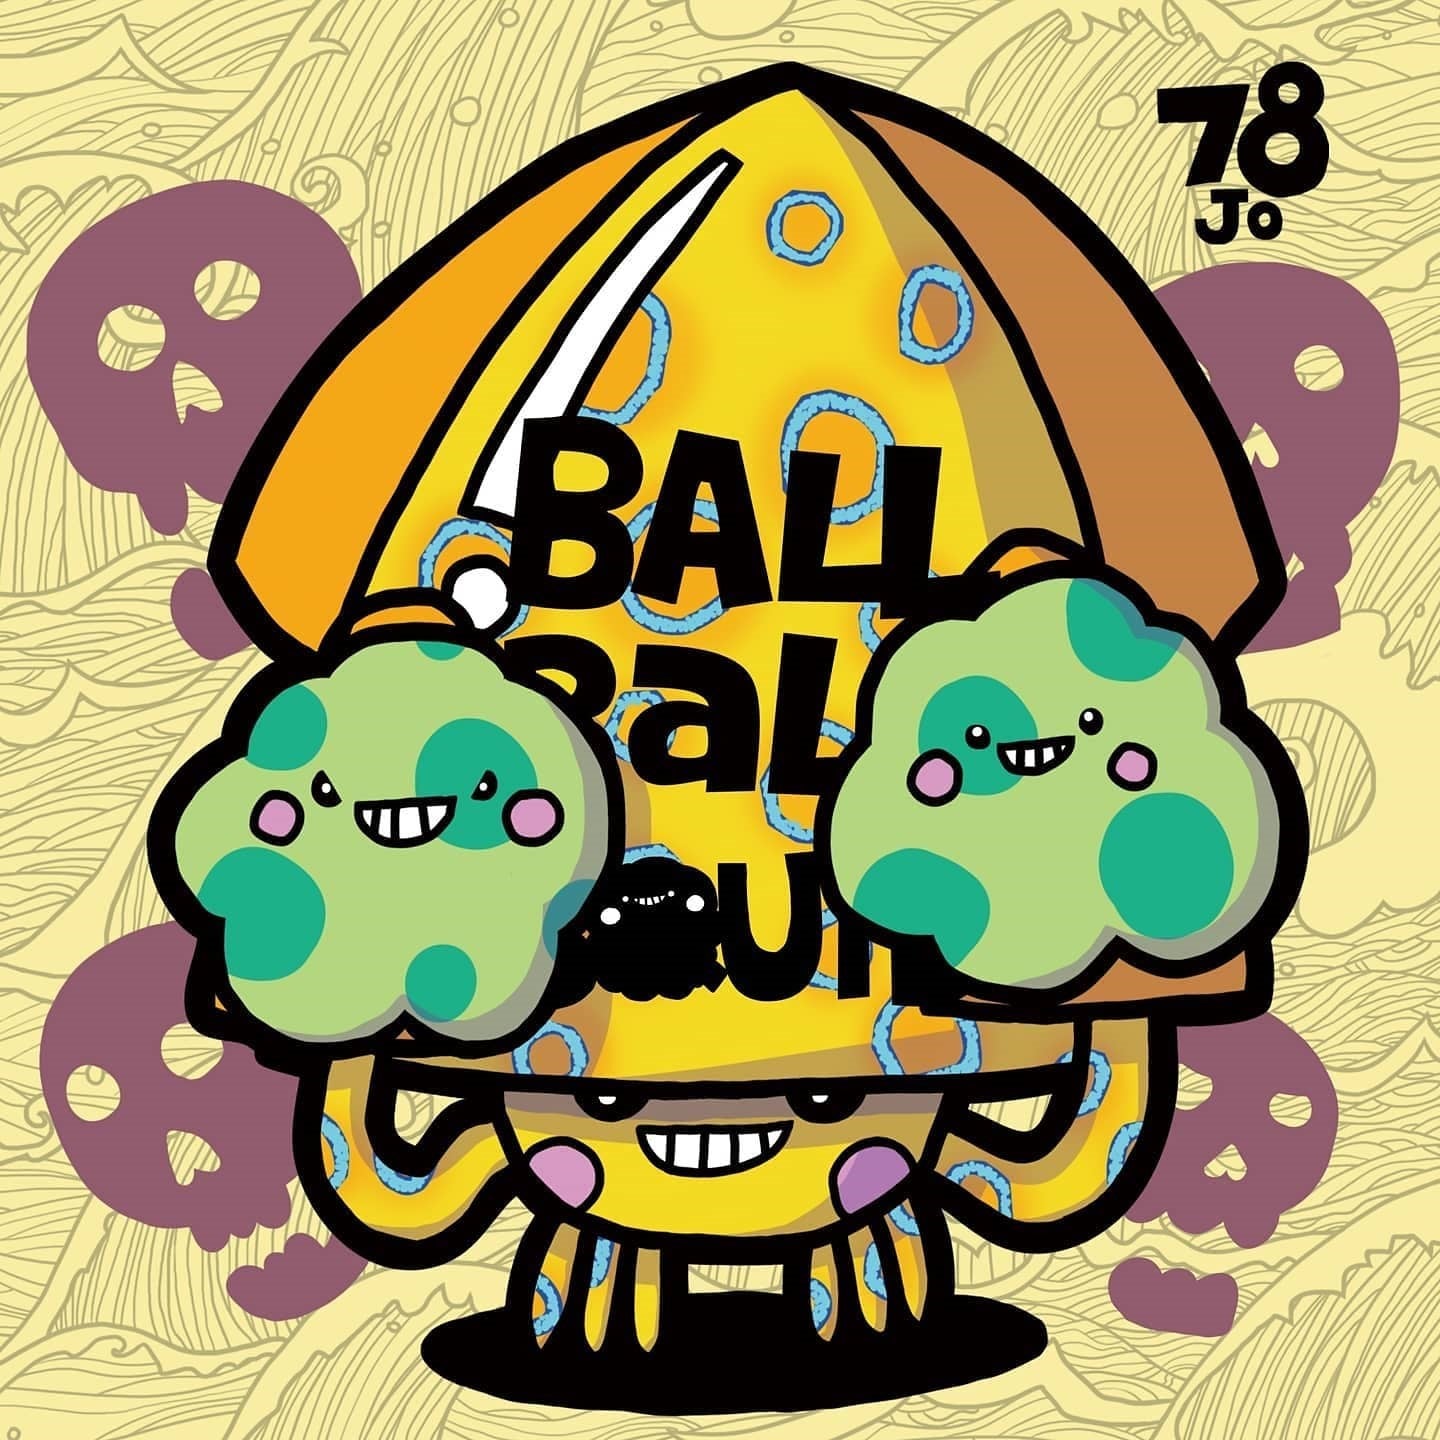 Ball Ball Squid Blue Ring by 78jo